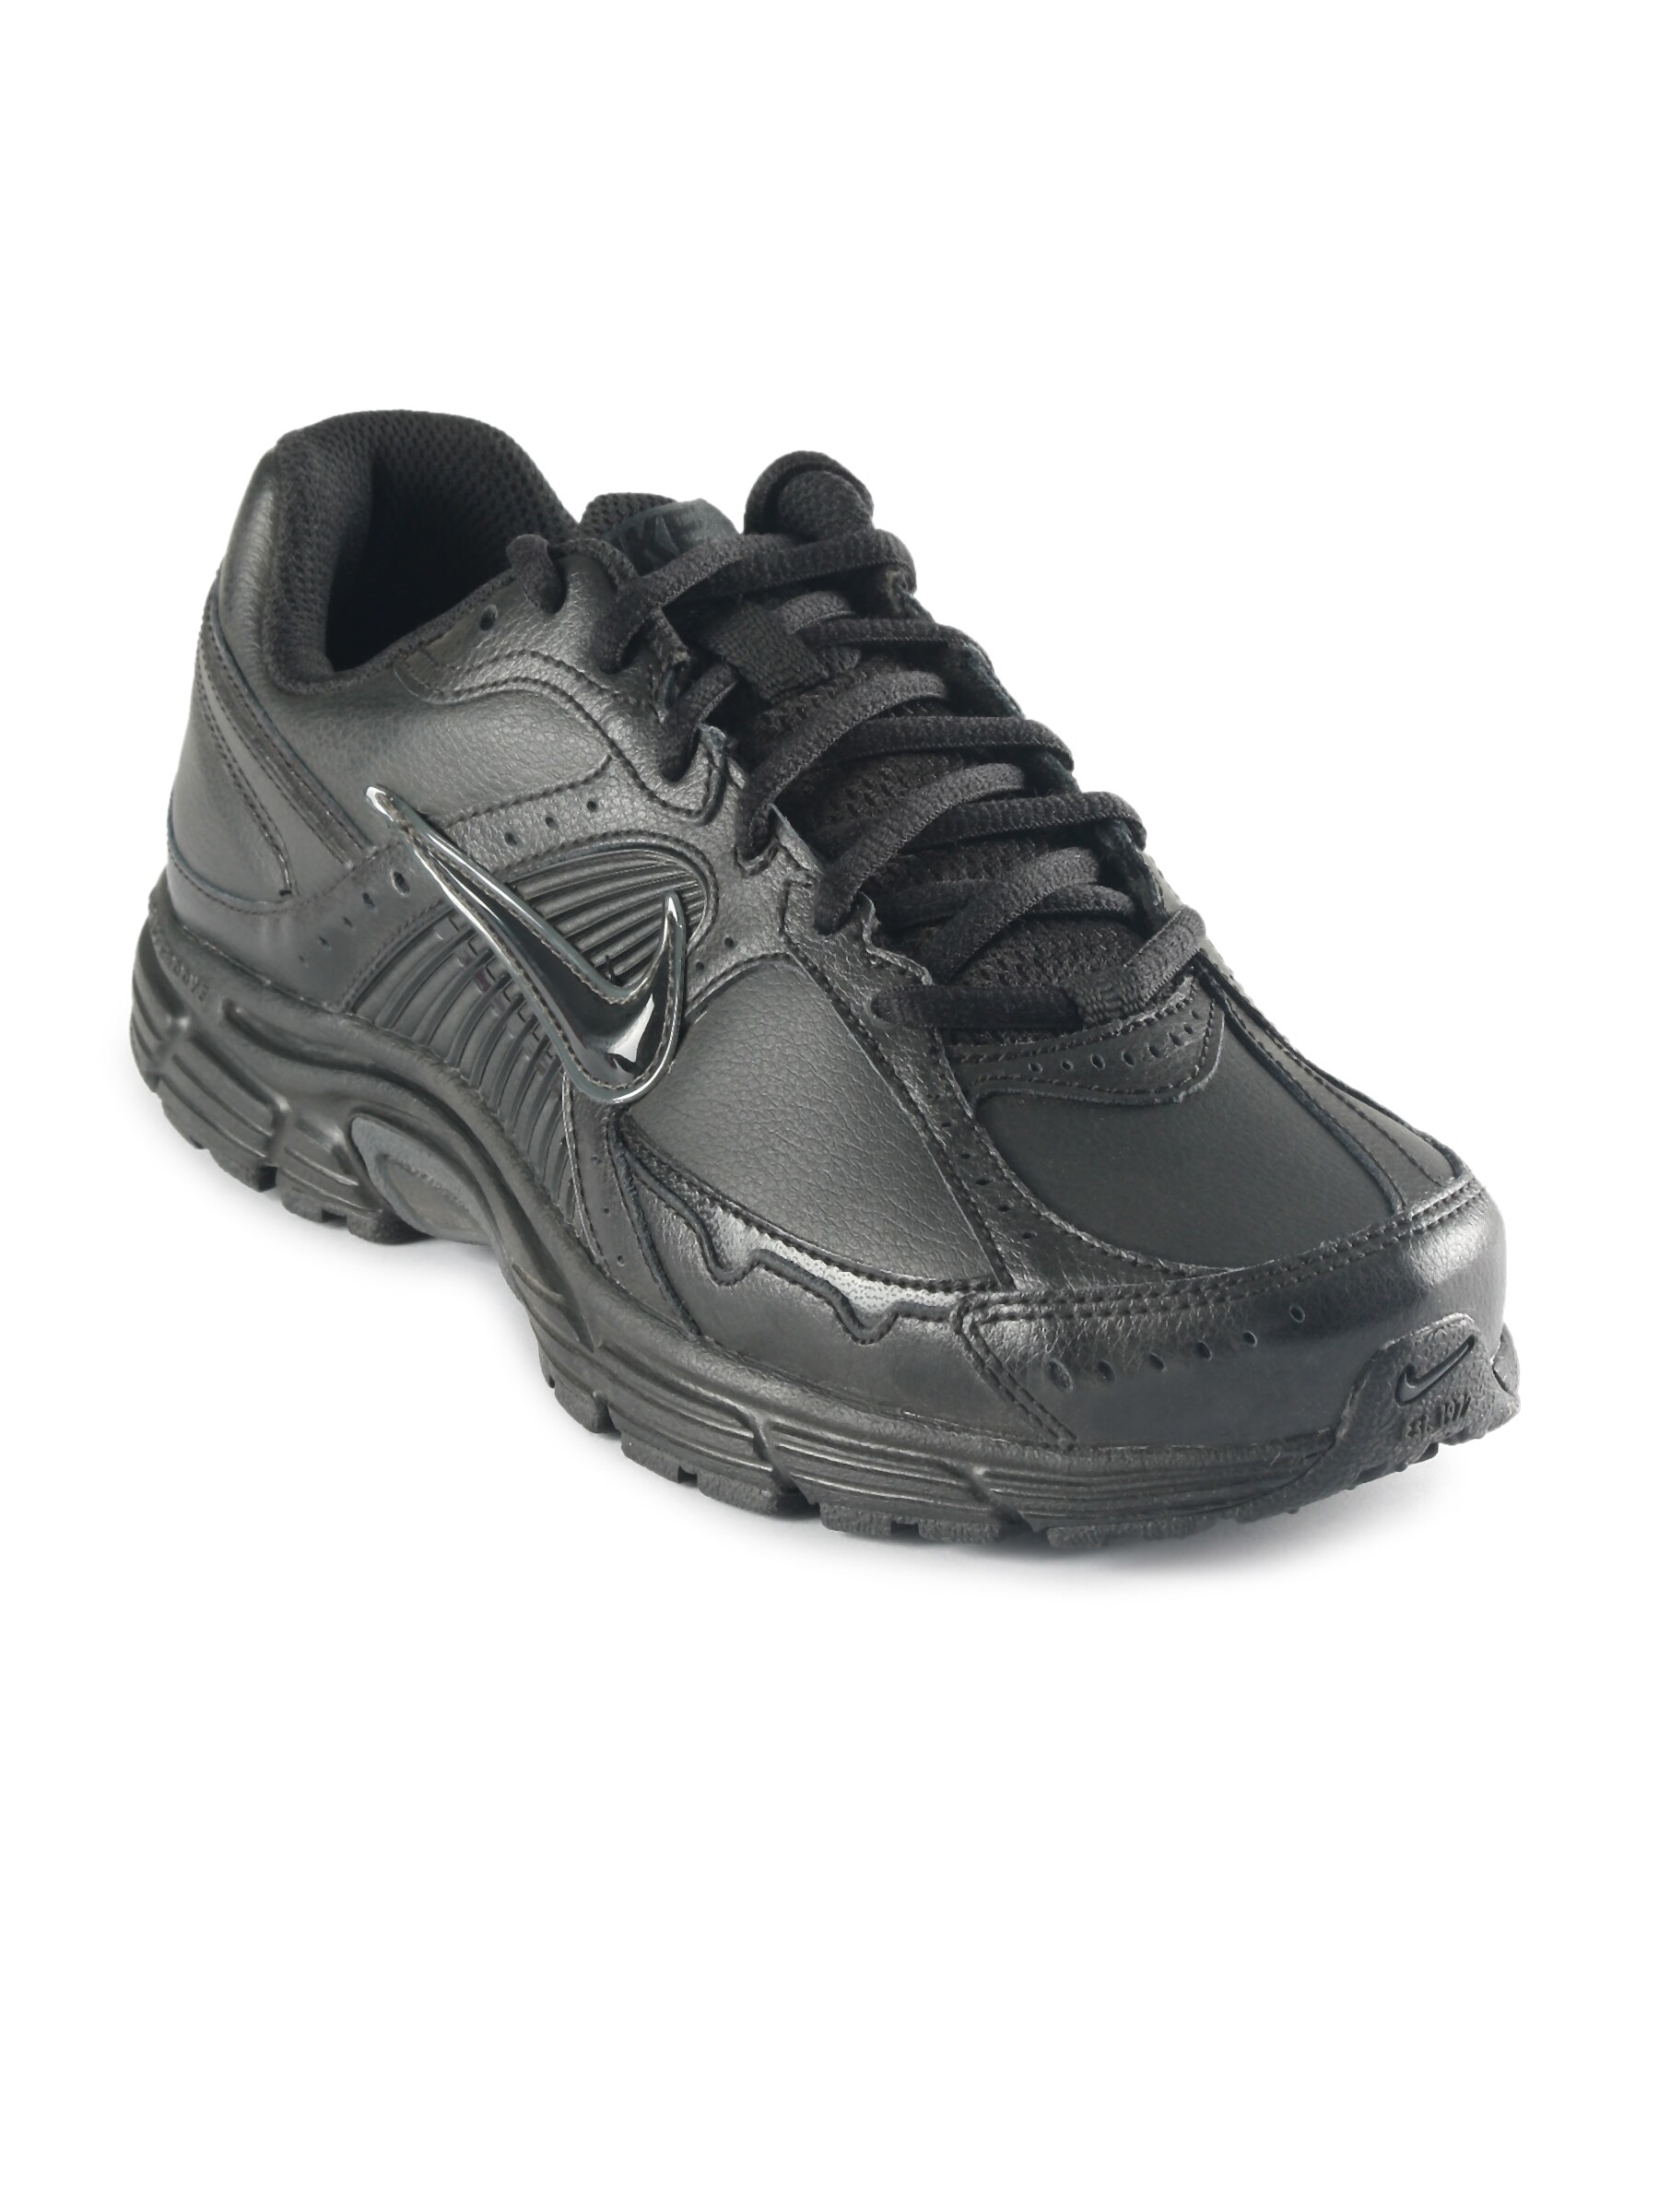 Nike Men Dart VII Leather Black Sports Shoe